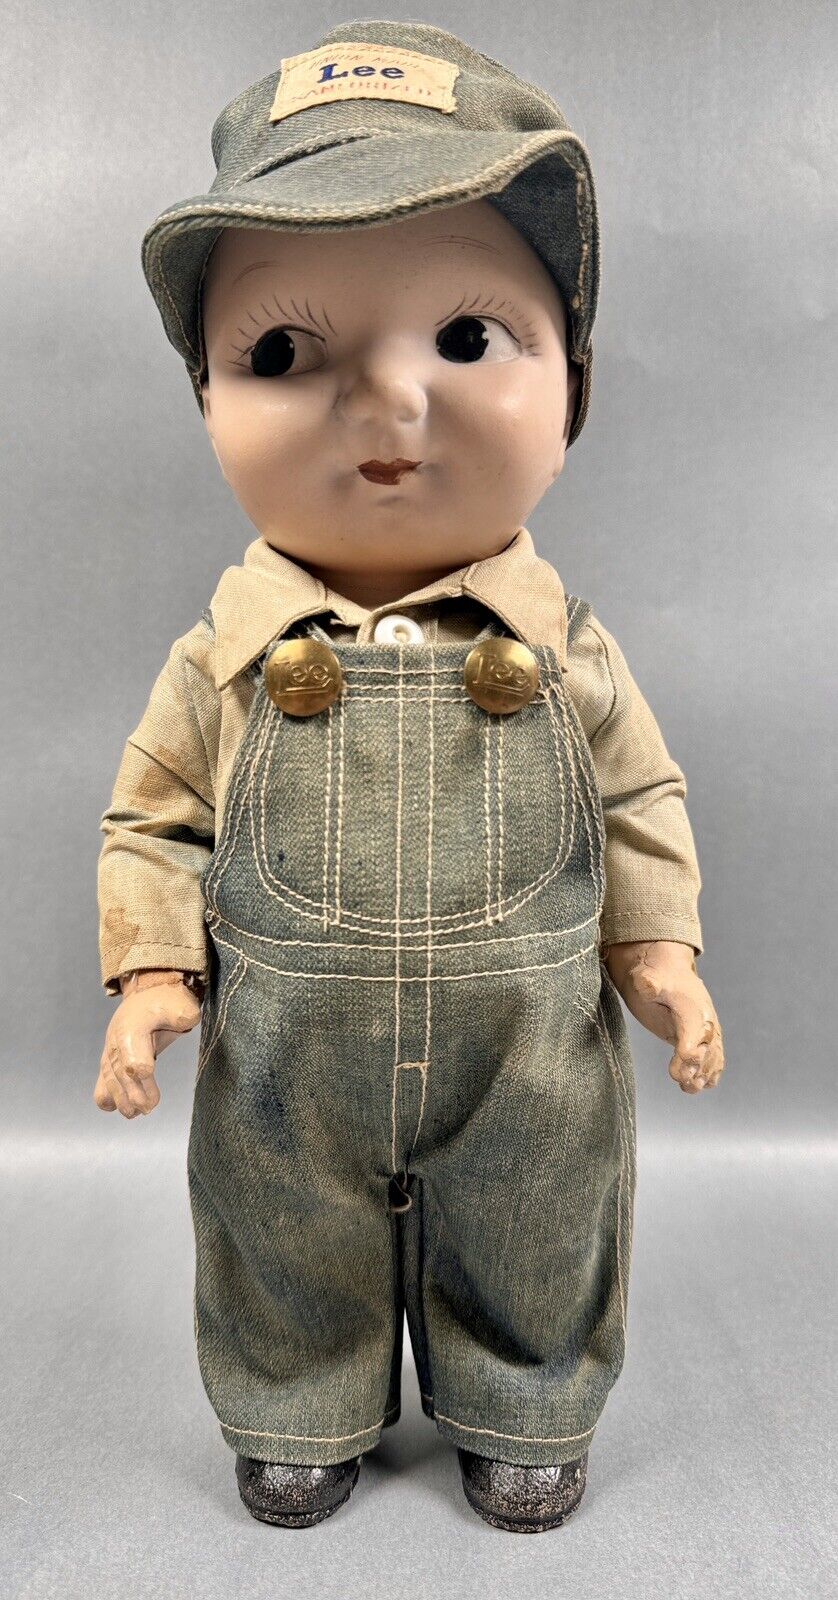 Vintage Buddy Lee Overalls Doll